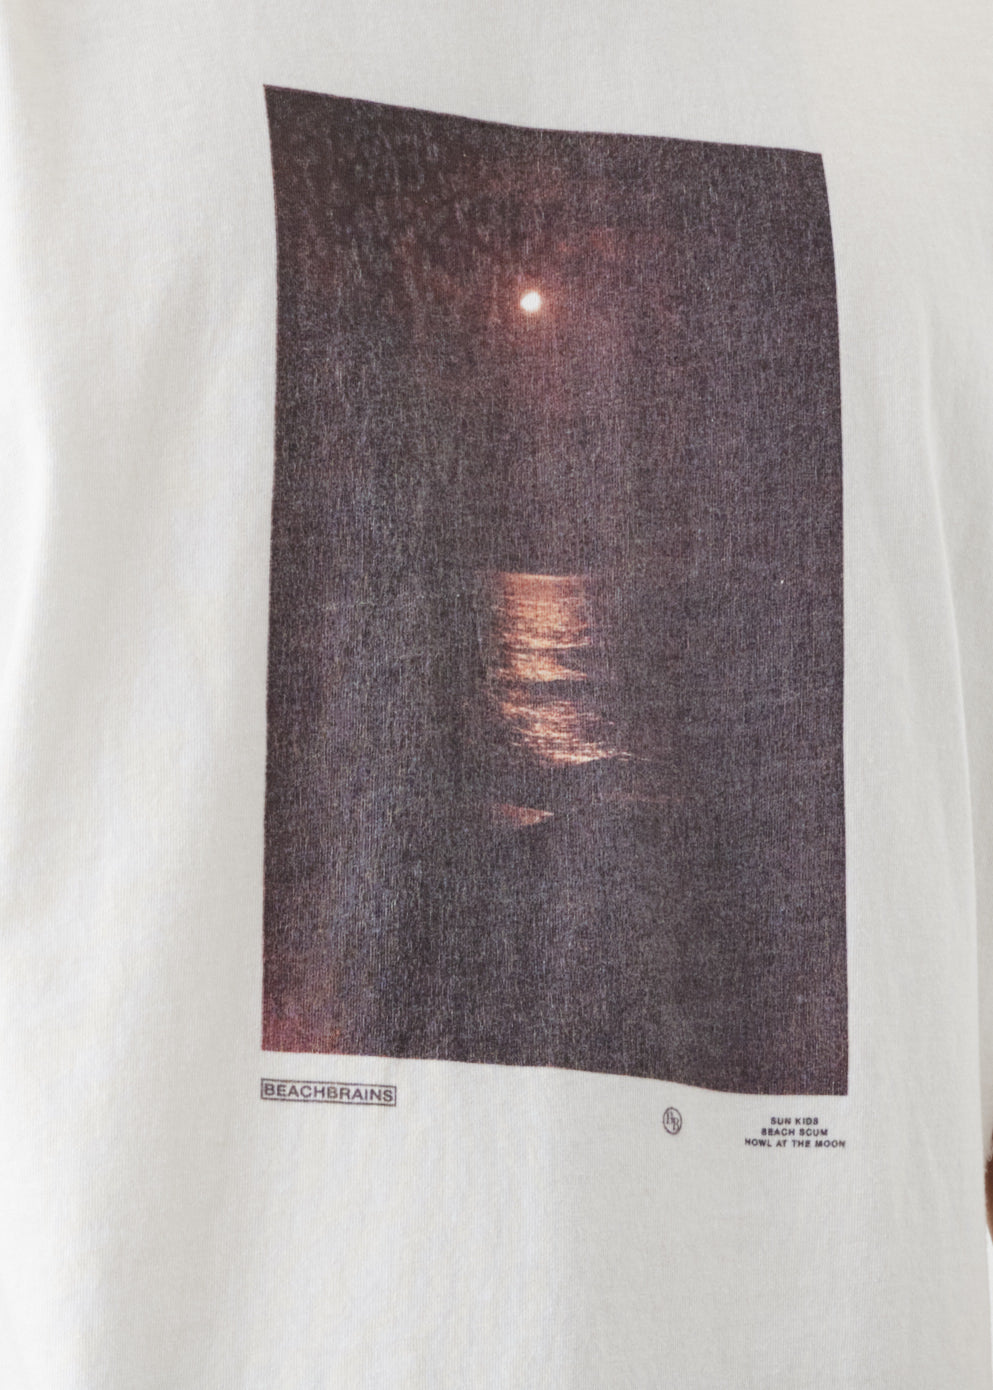 Moonrise T-Shirt